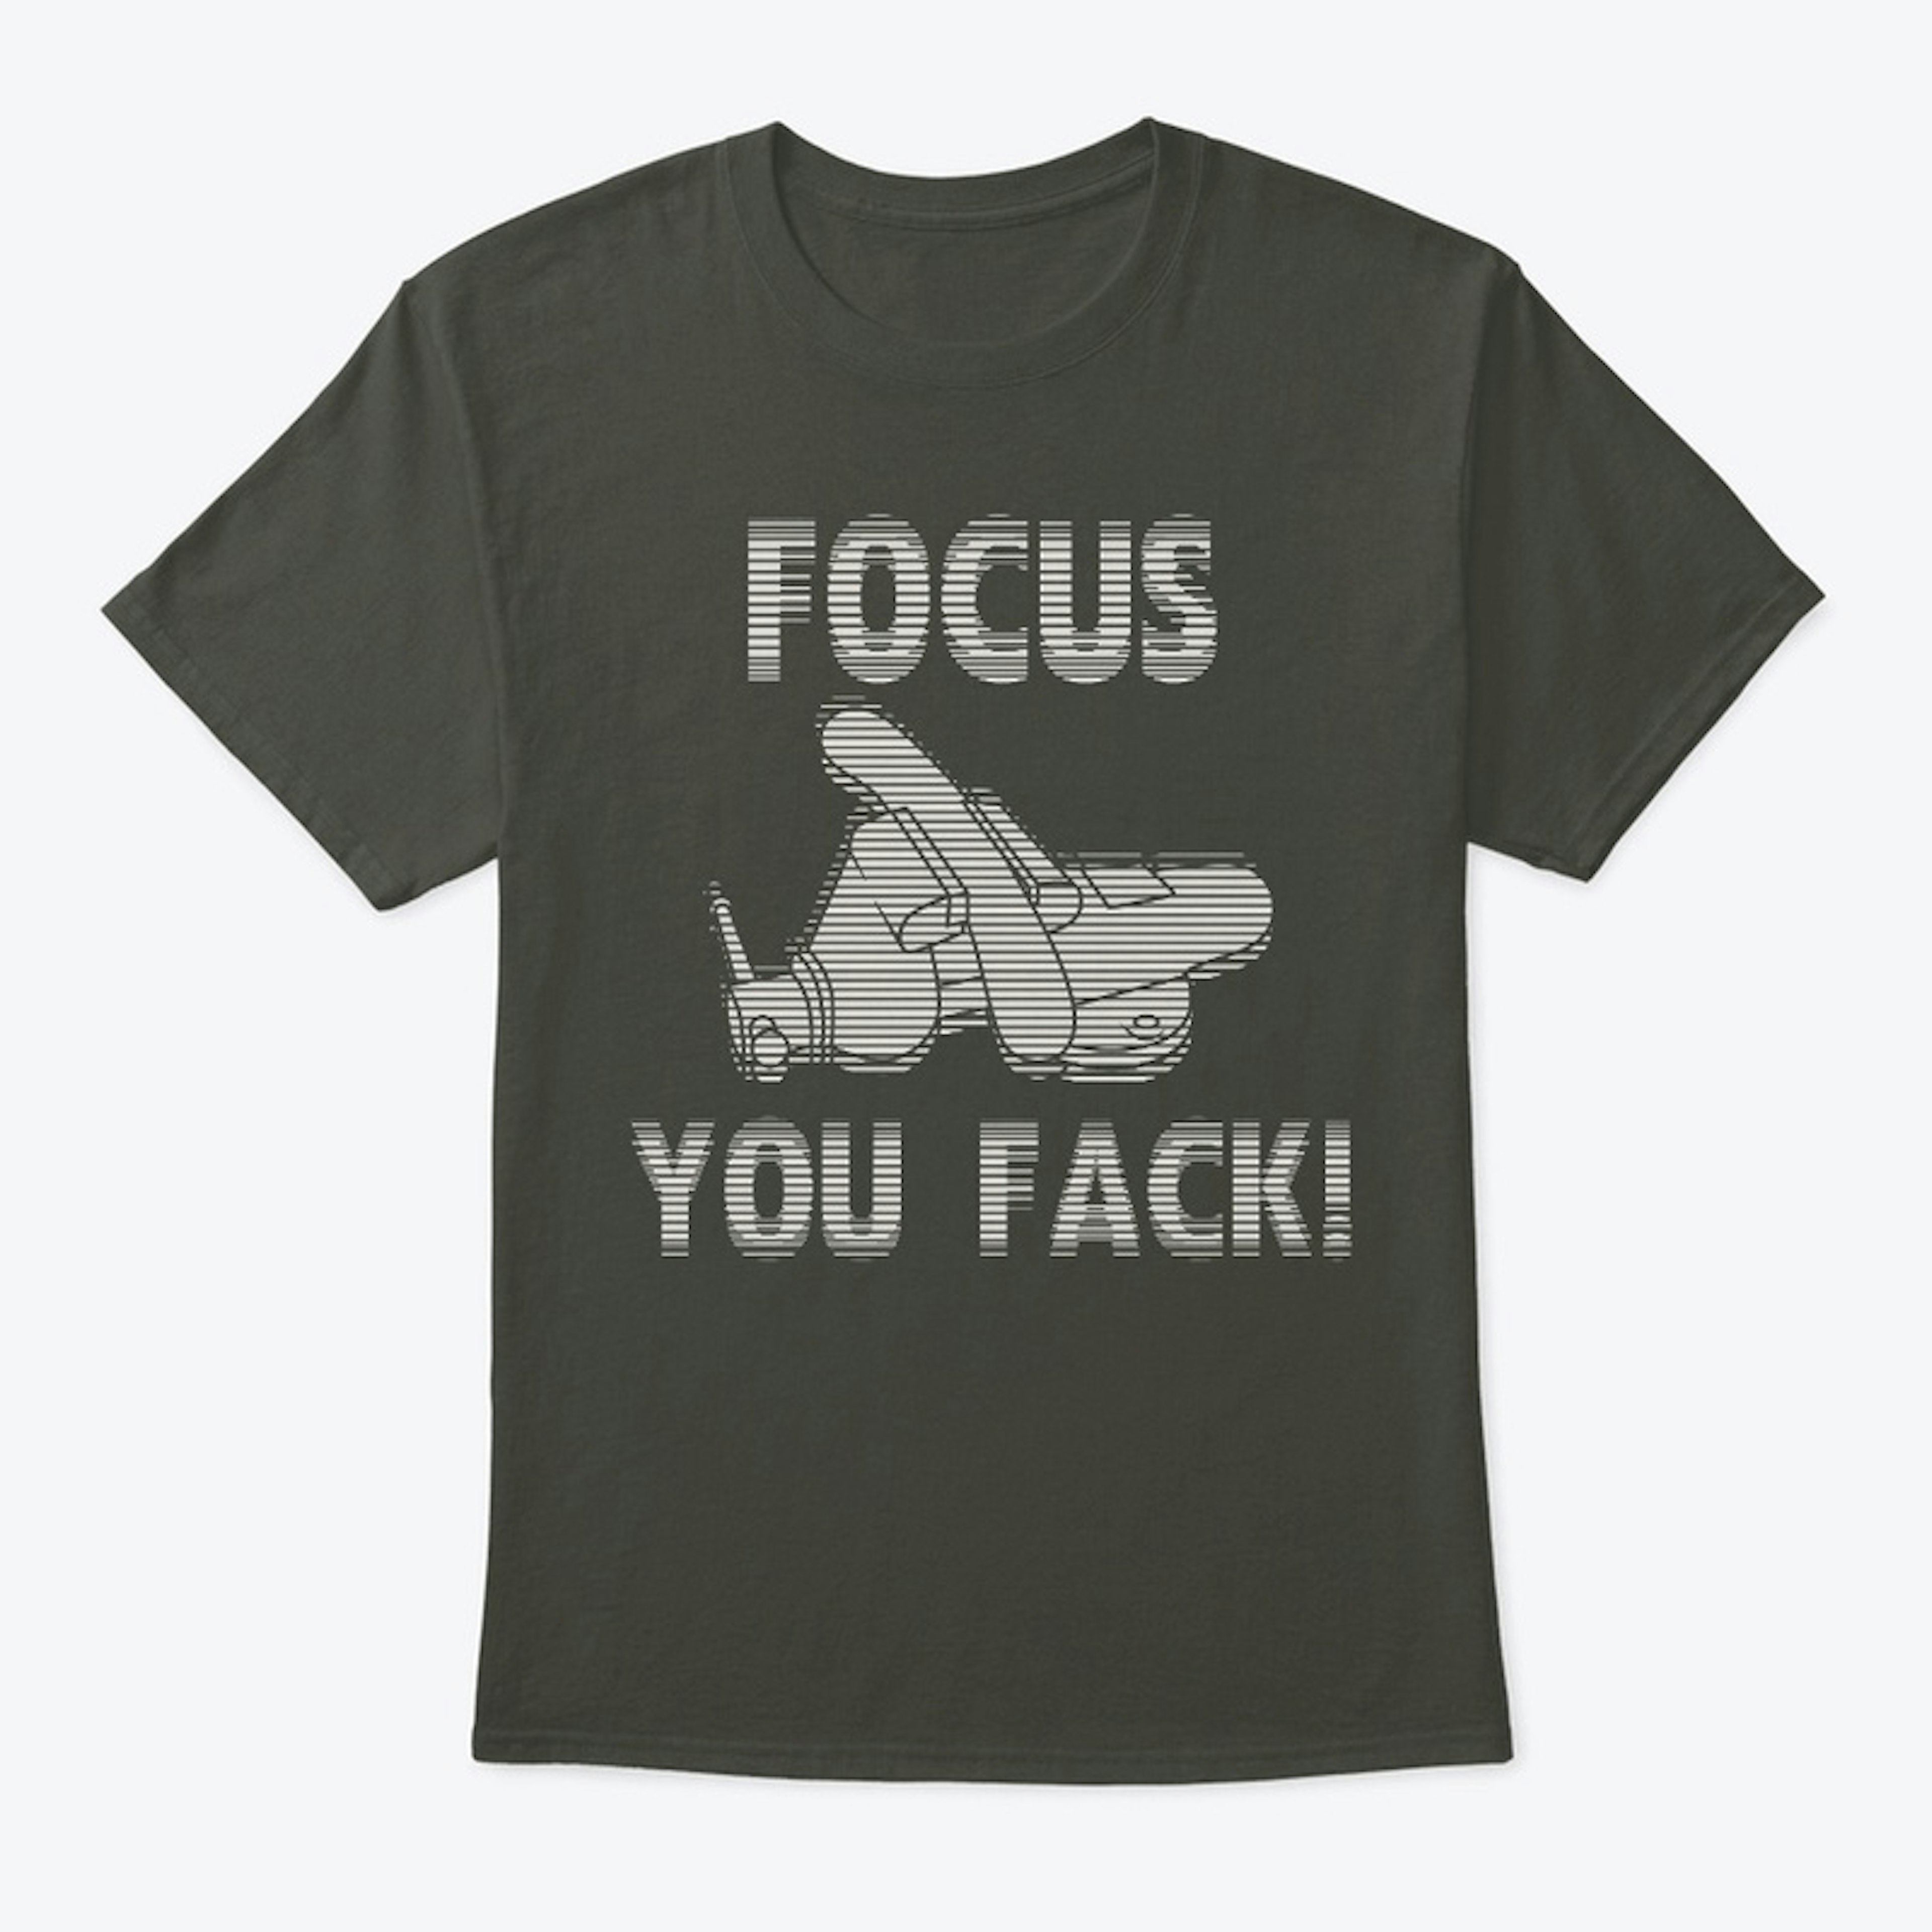 Focus You Fack! Not-So Skookum Choocher